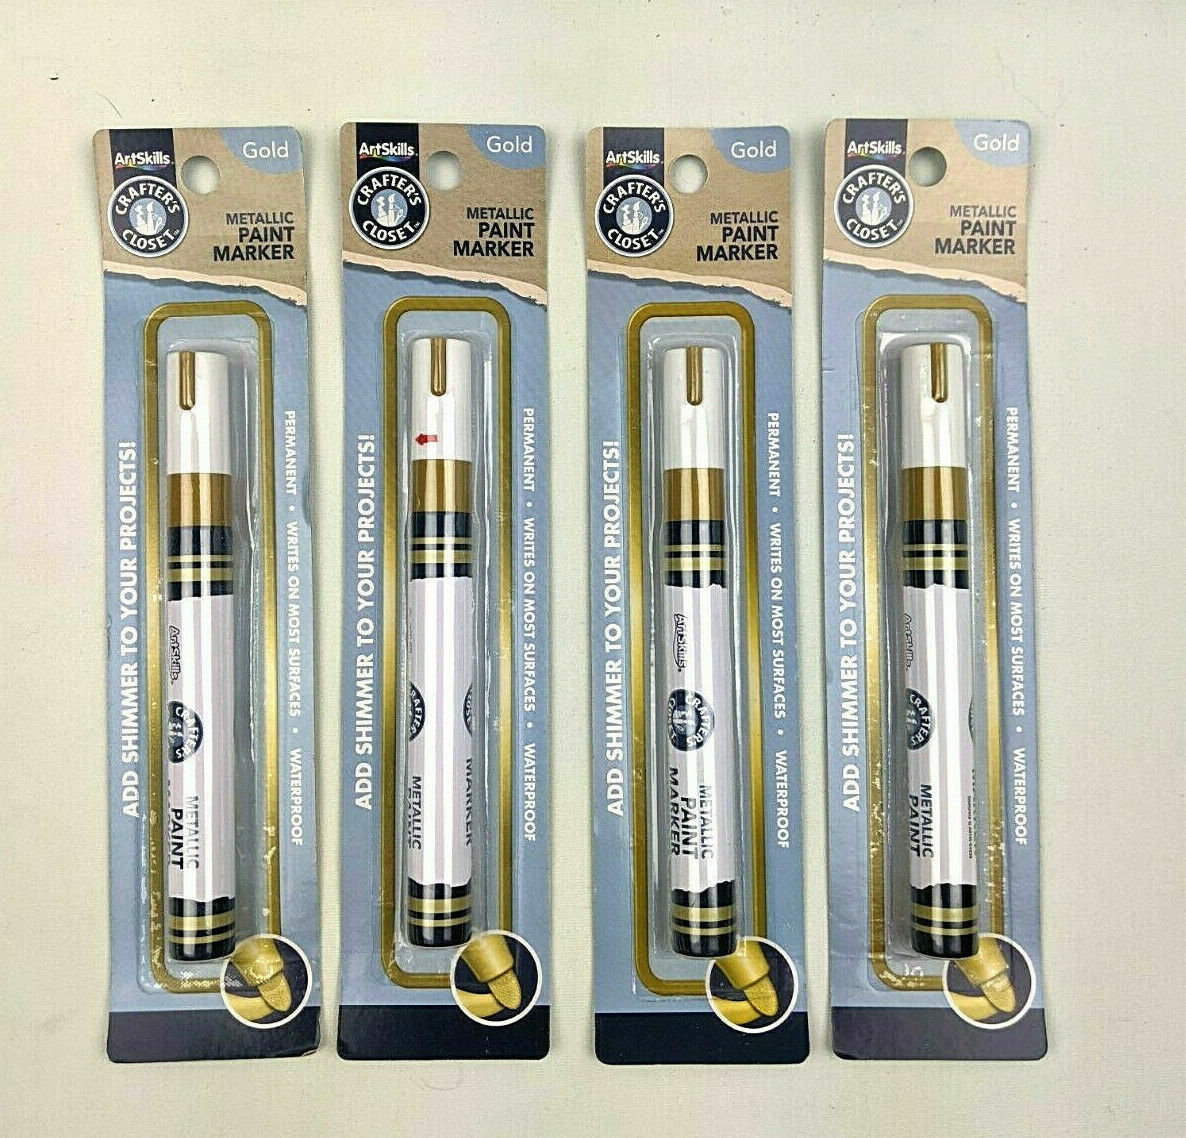 (4) Pack Metallic GOLD Paint Marker Pen Arts Crafts Waterproof Permanent School ArtSkills 4236